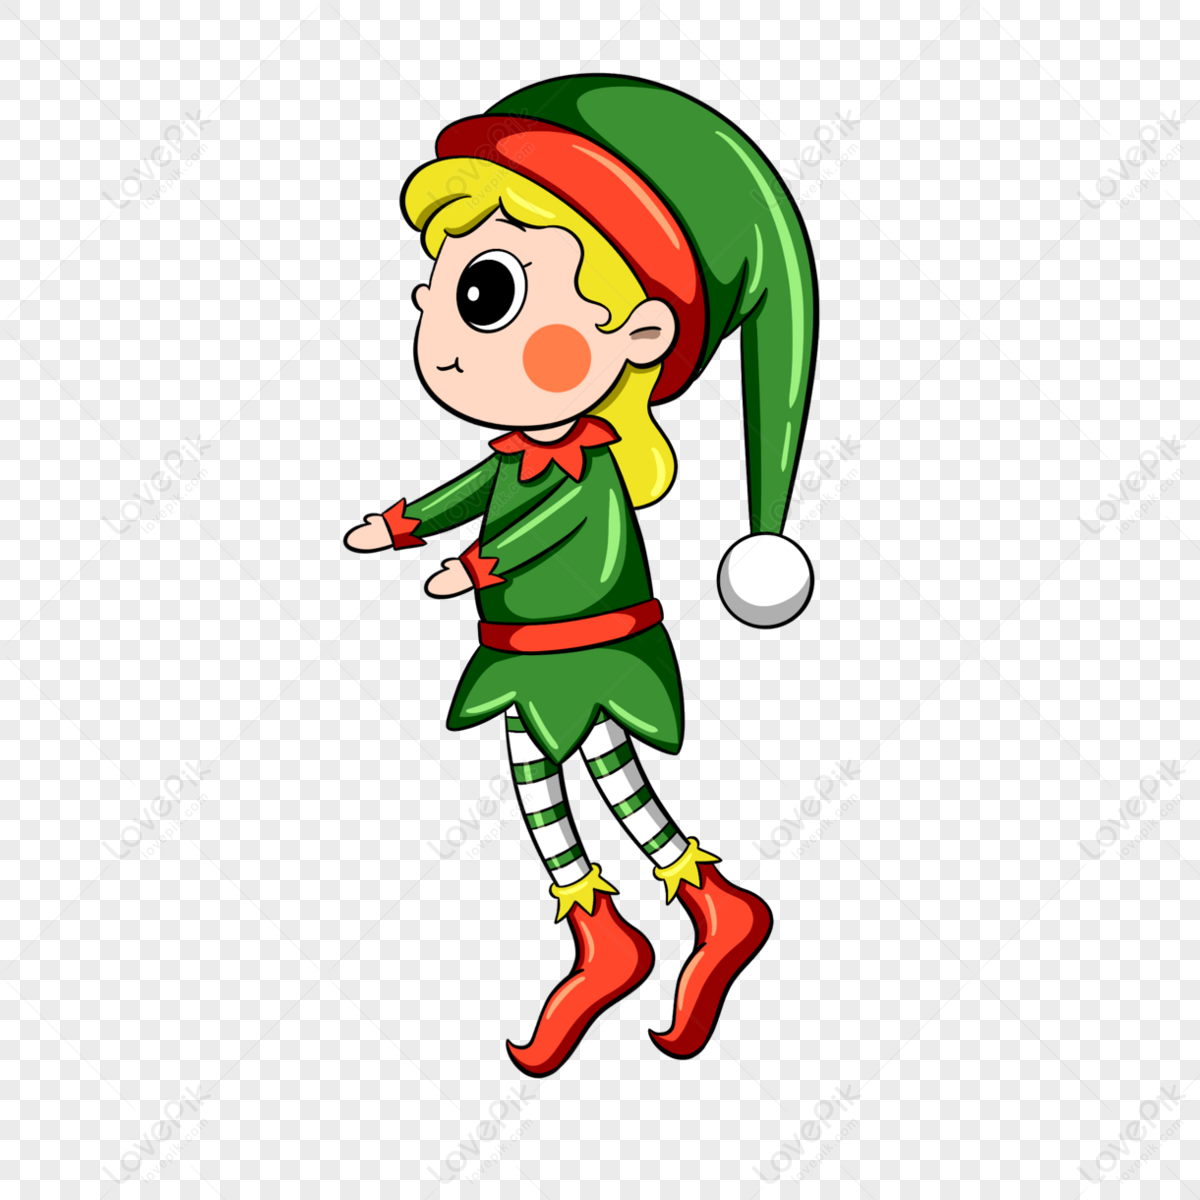 Cartoon Christmas Elf, Christmas PNG Transparent Images, Elf PNG ...